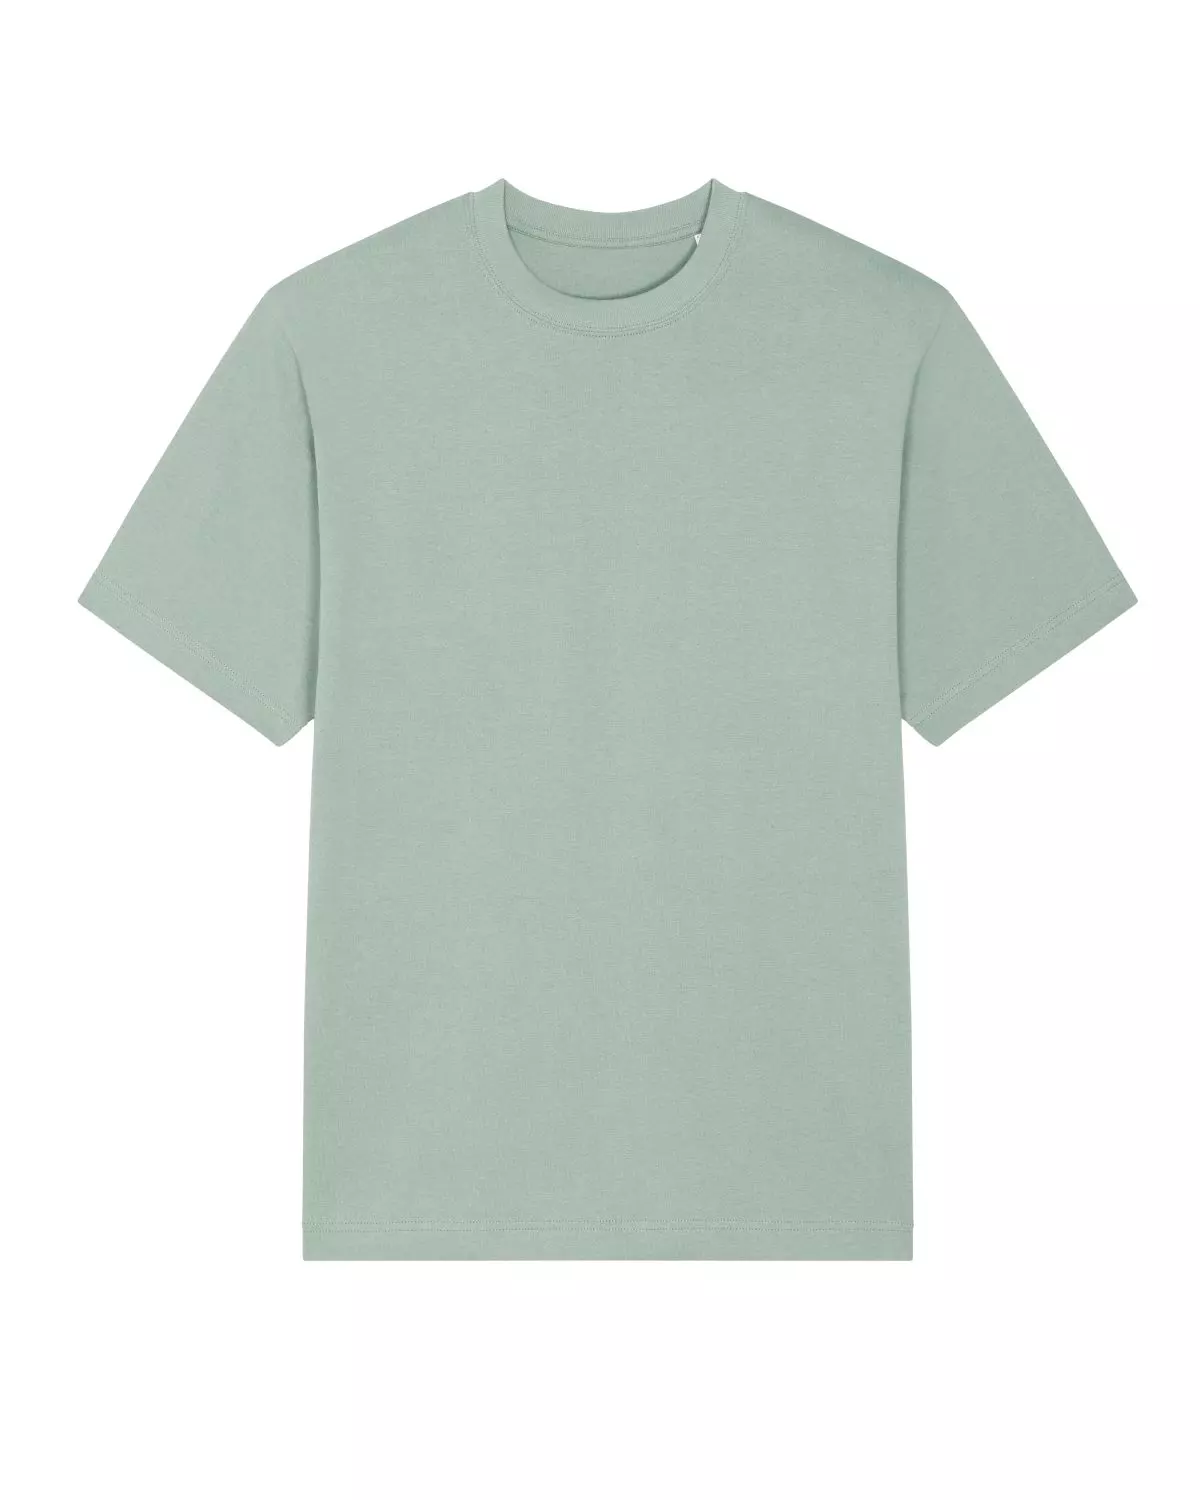 Oversized T-Shirt Modell: Free